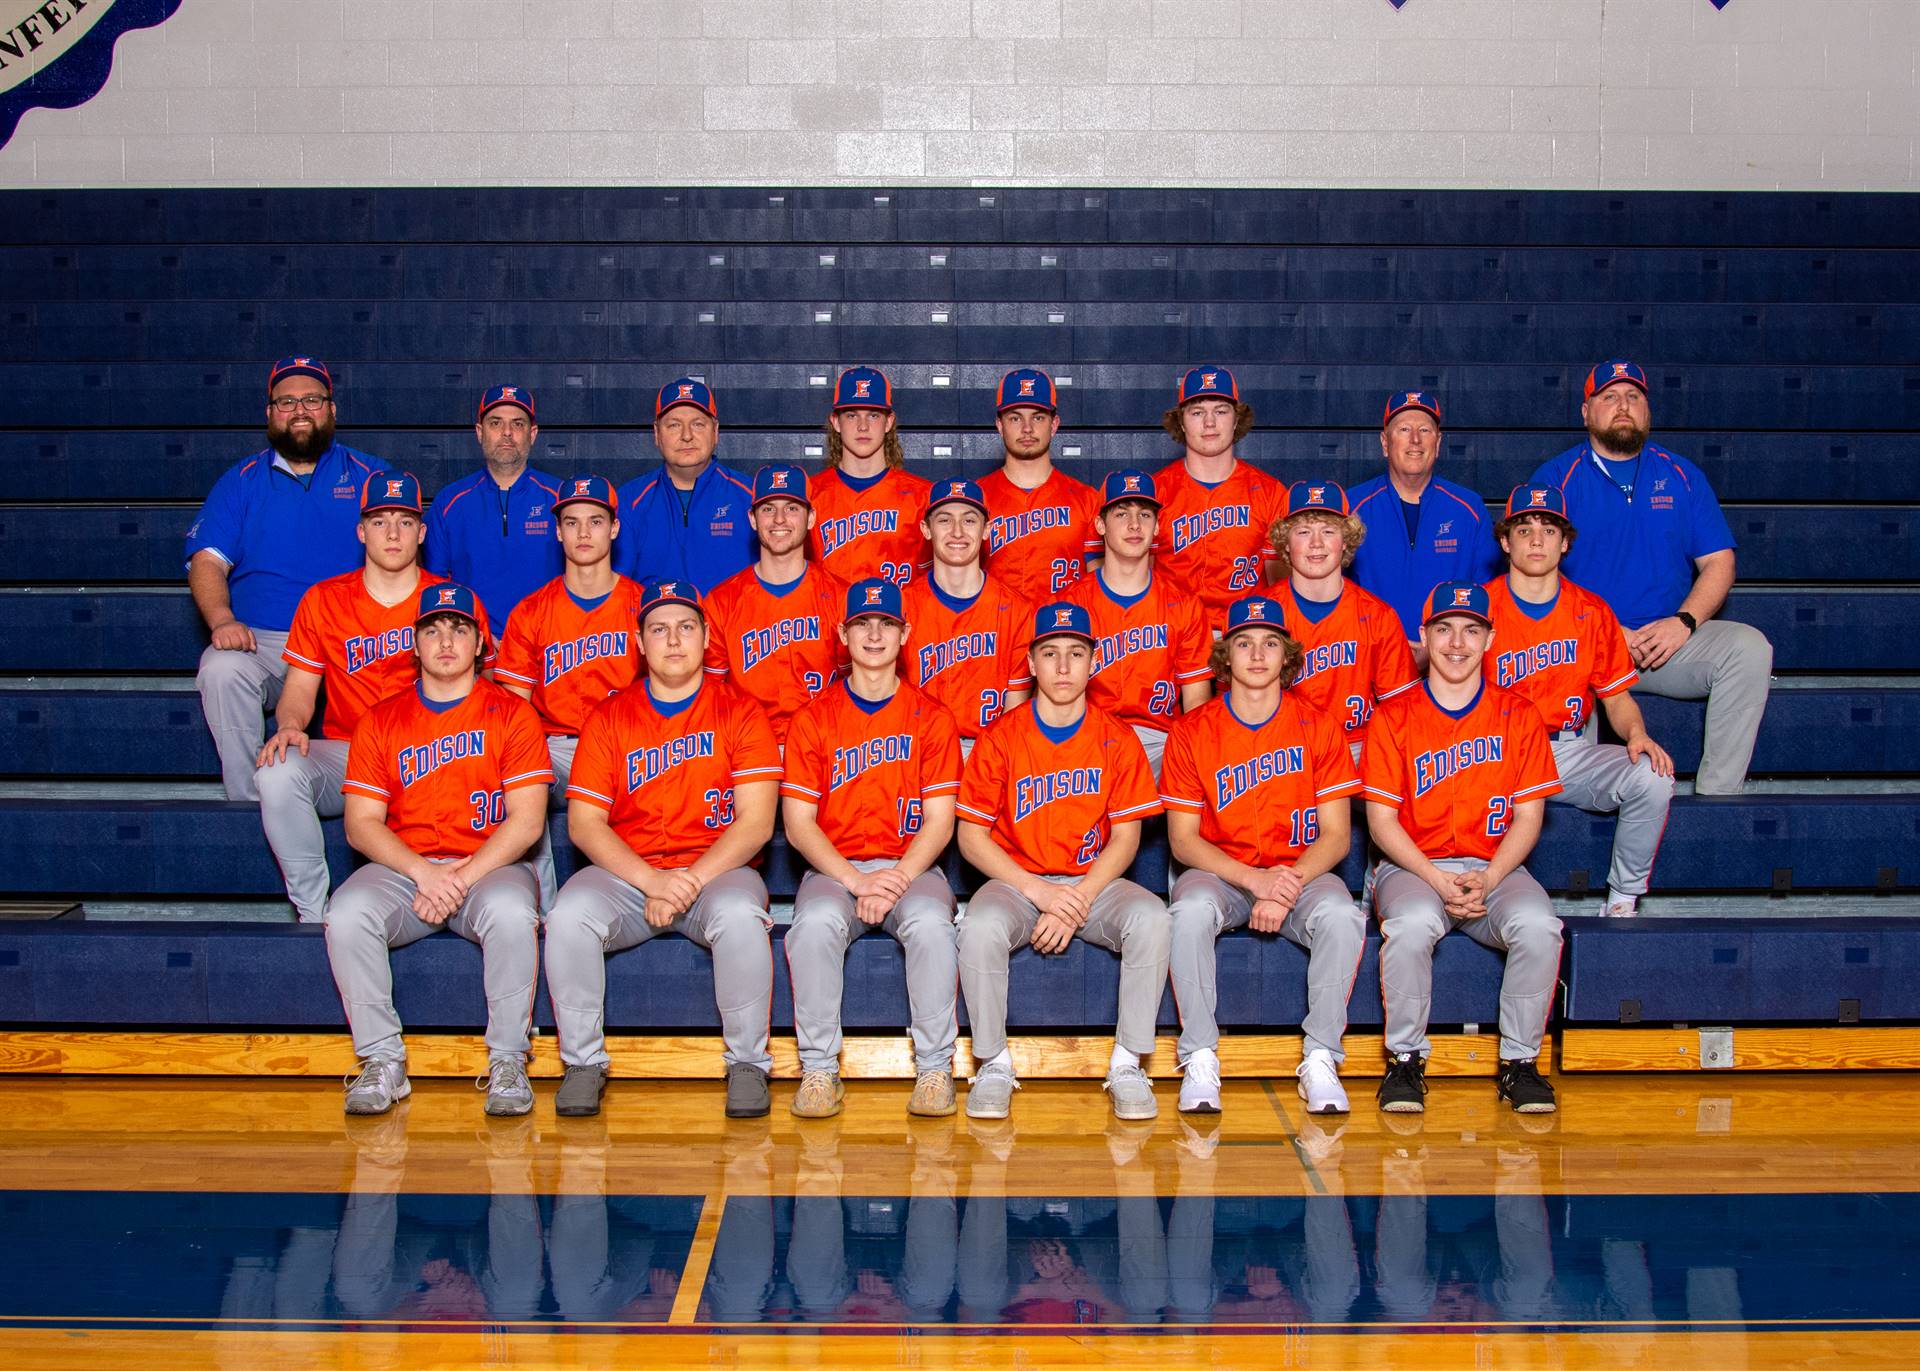 Charger Varsity Baseball Team